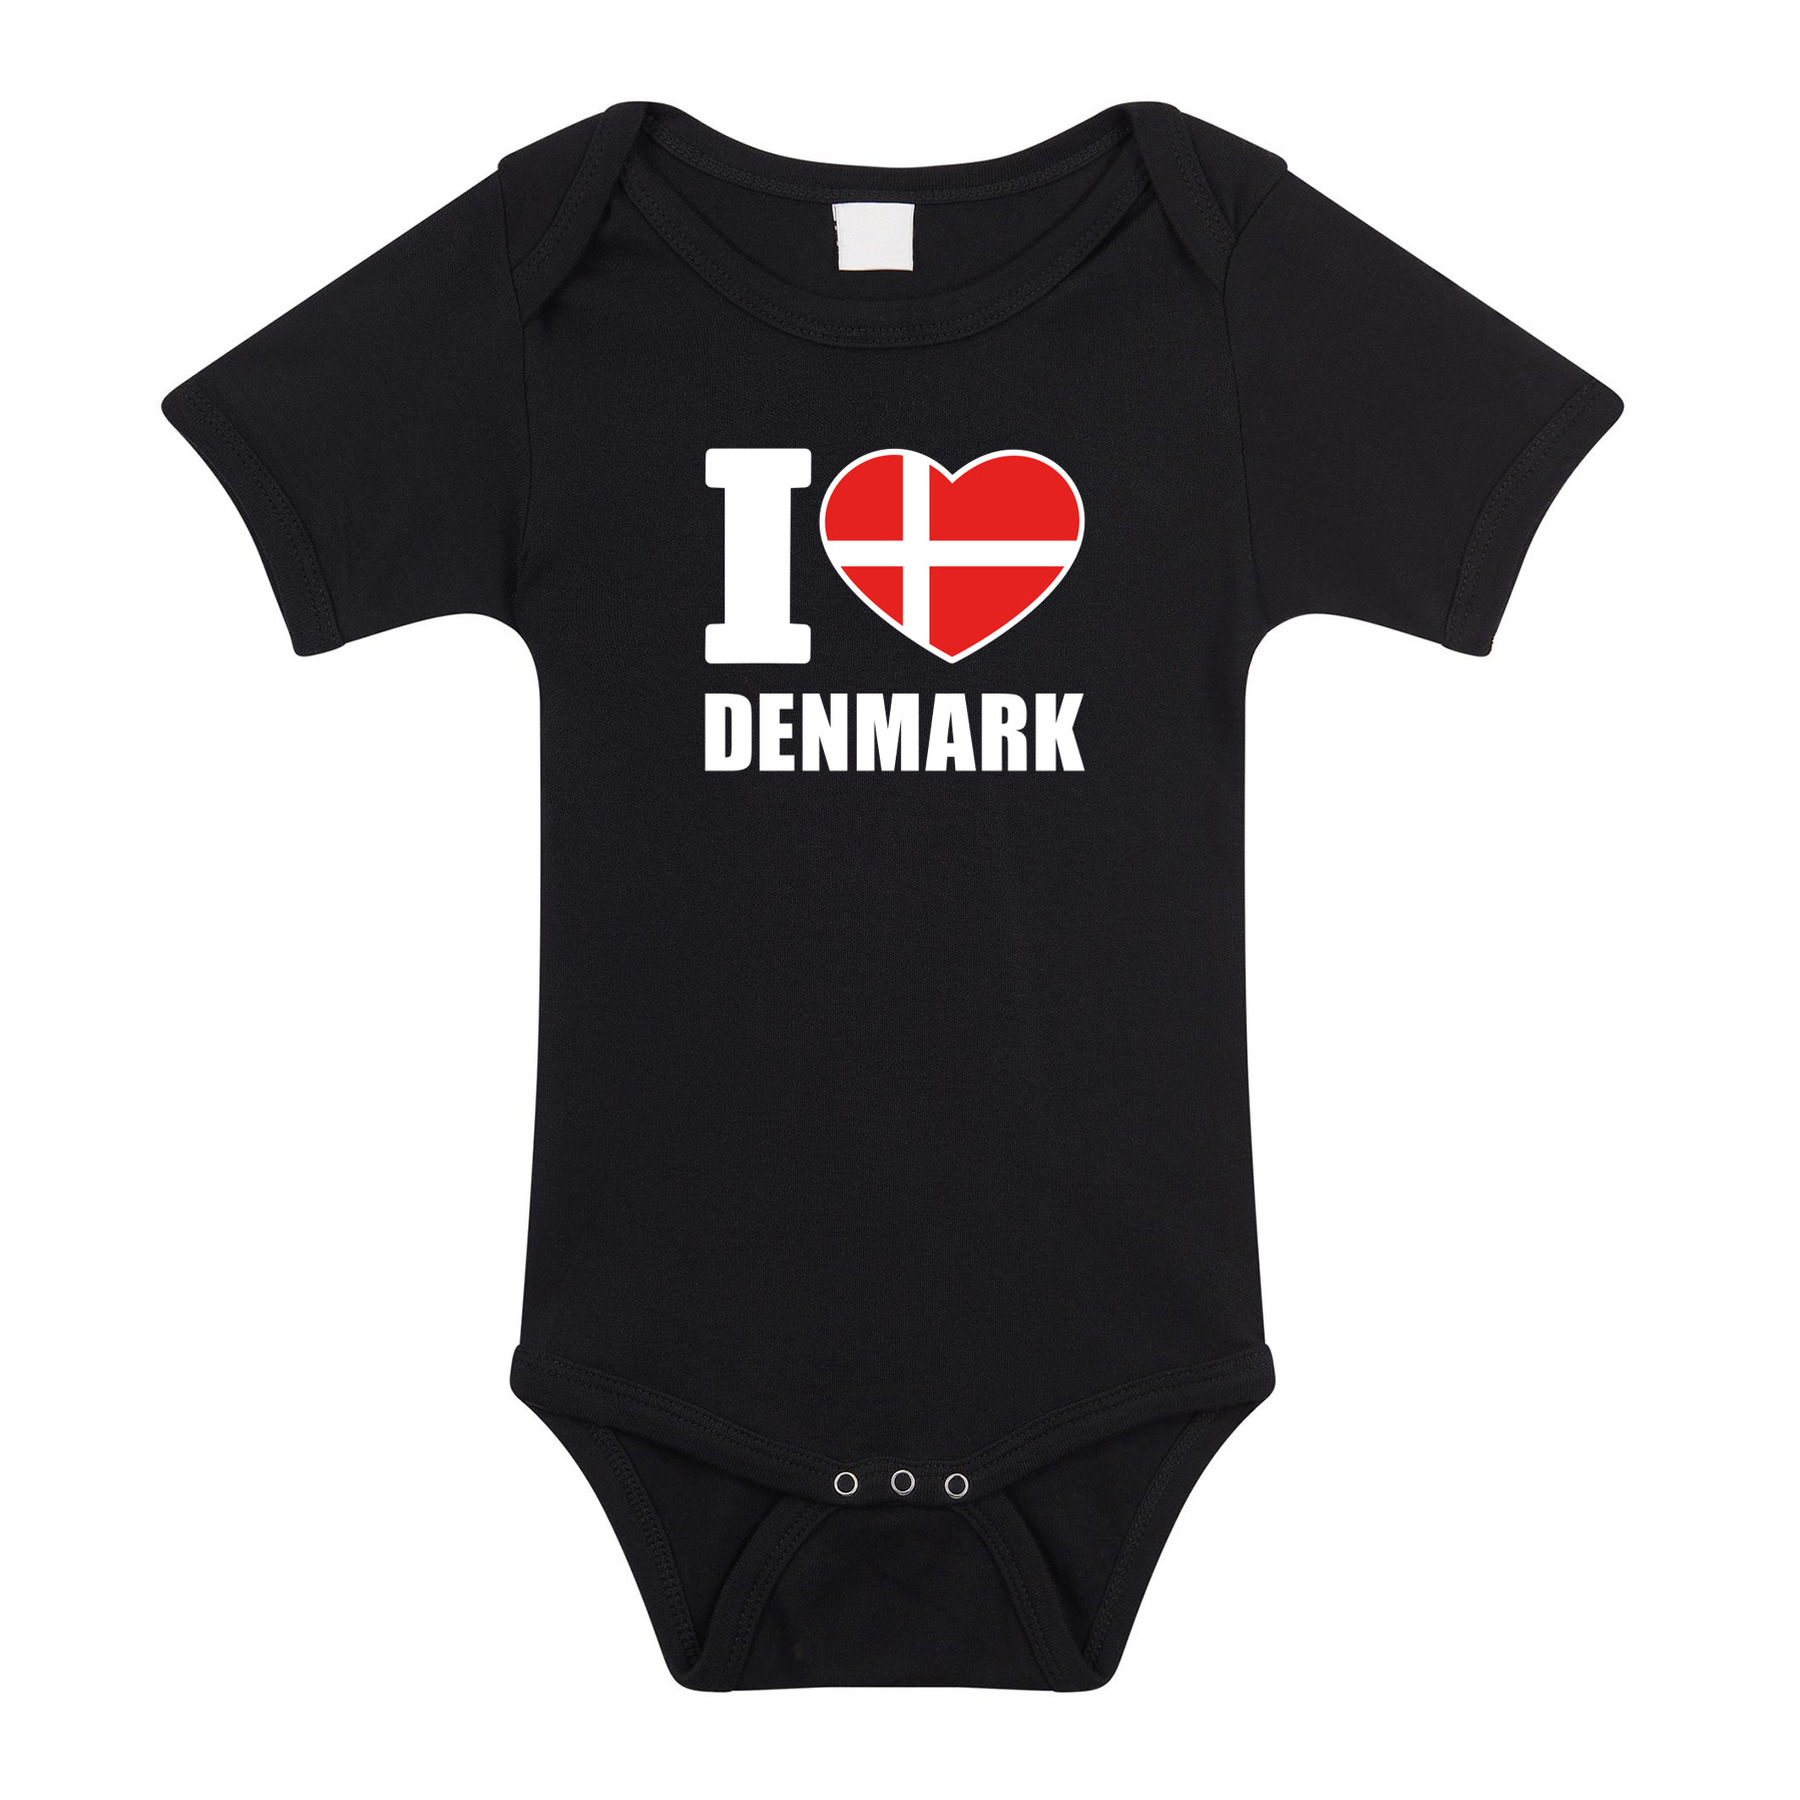 I love Denmark baby rompertje zwart Denemarken jongen-meisje